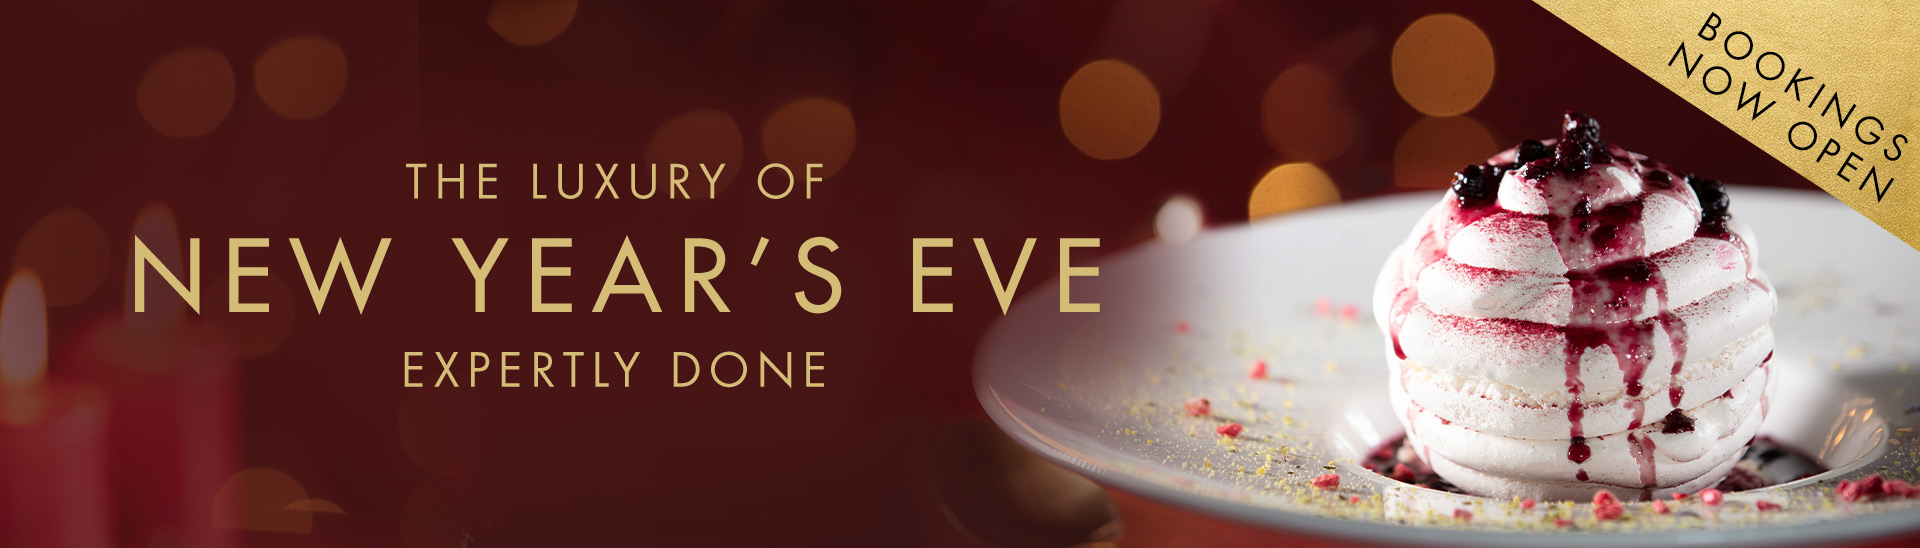 New Year’s Eve Menu at Miller & Carter Milton Keynes • Book Now